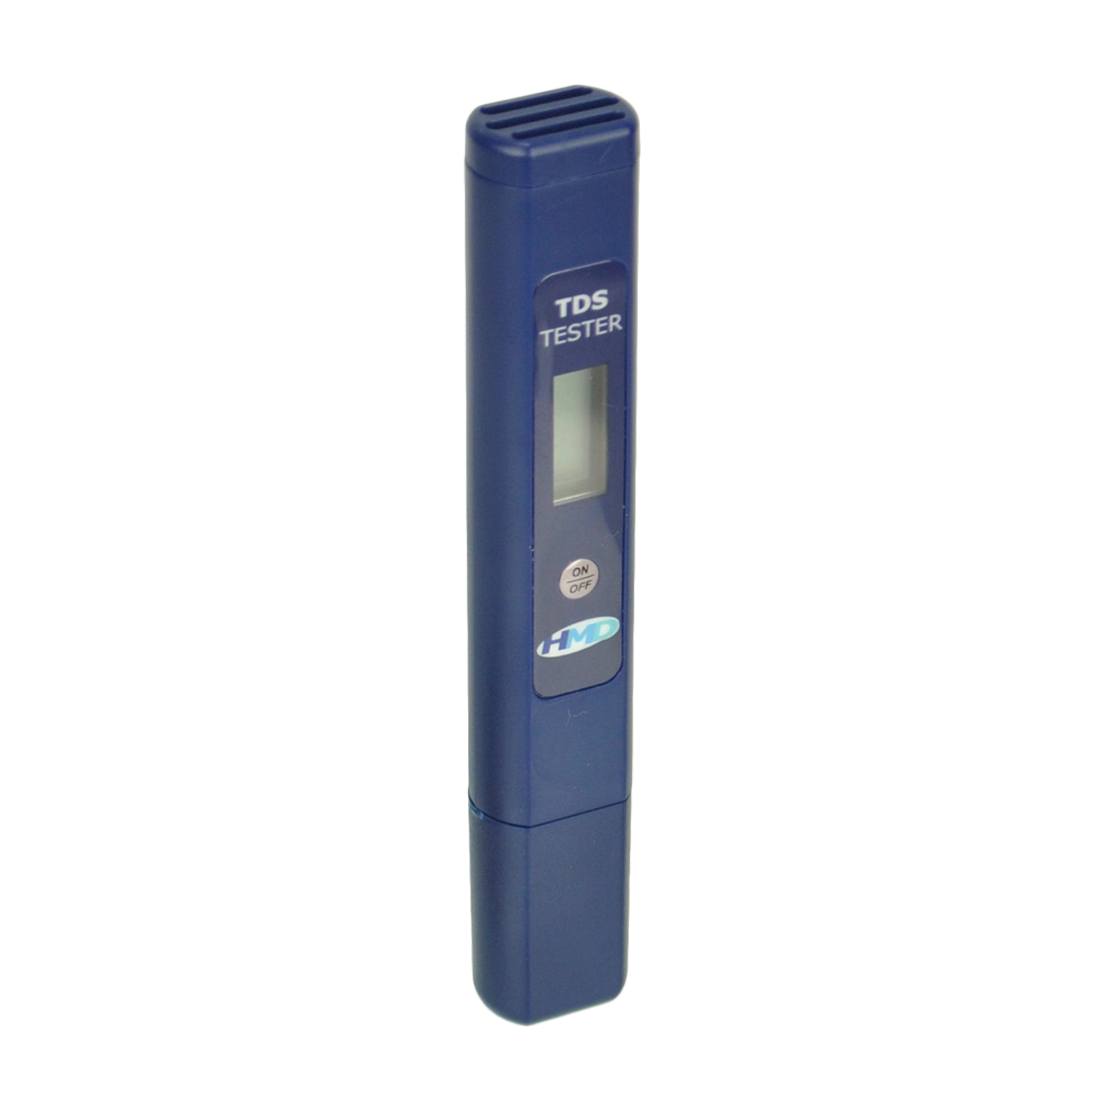 HM Digital Handheld TDS Meter